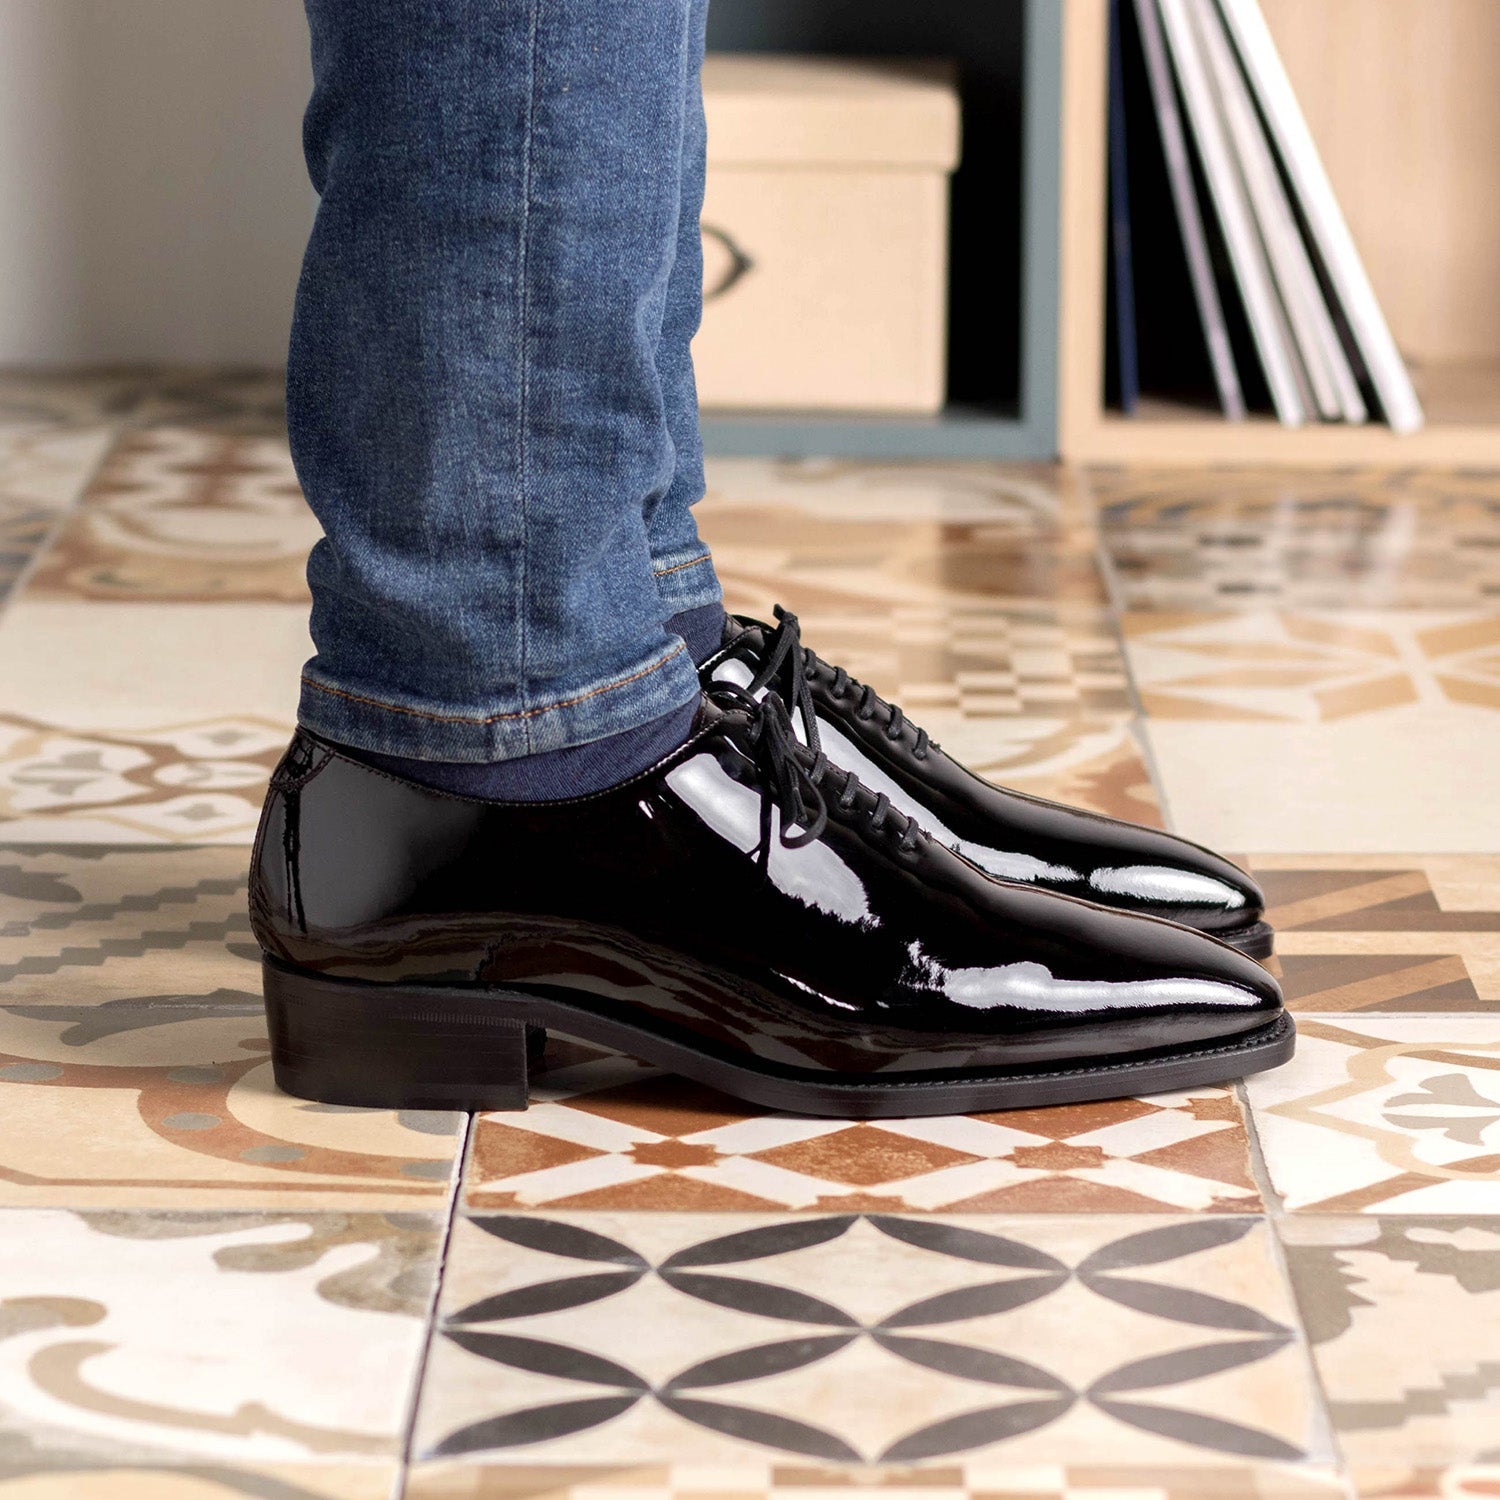 Ambrogio Men's Dress Shoes Black Patent Leather Wholecut Tuxedo Oxford –  AmbrogioShoes